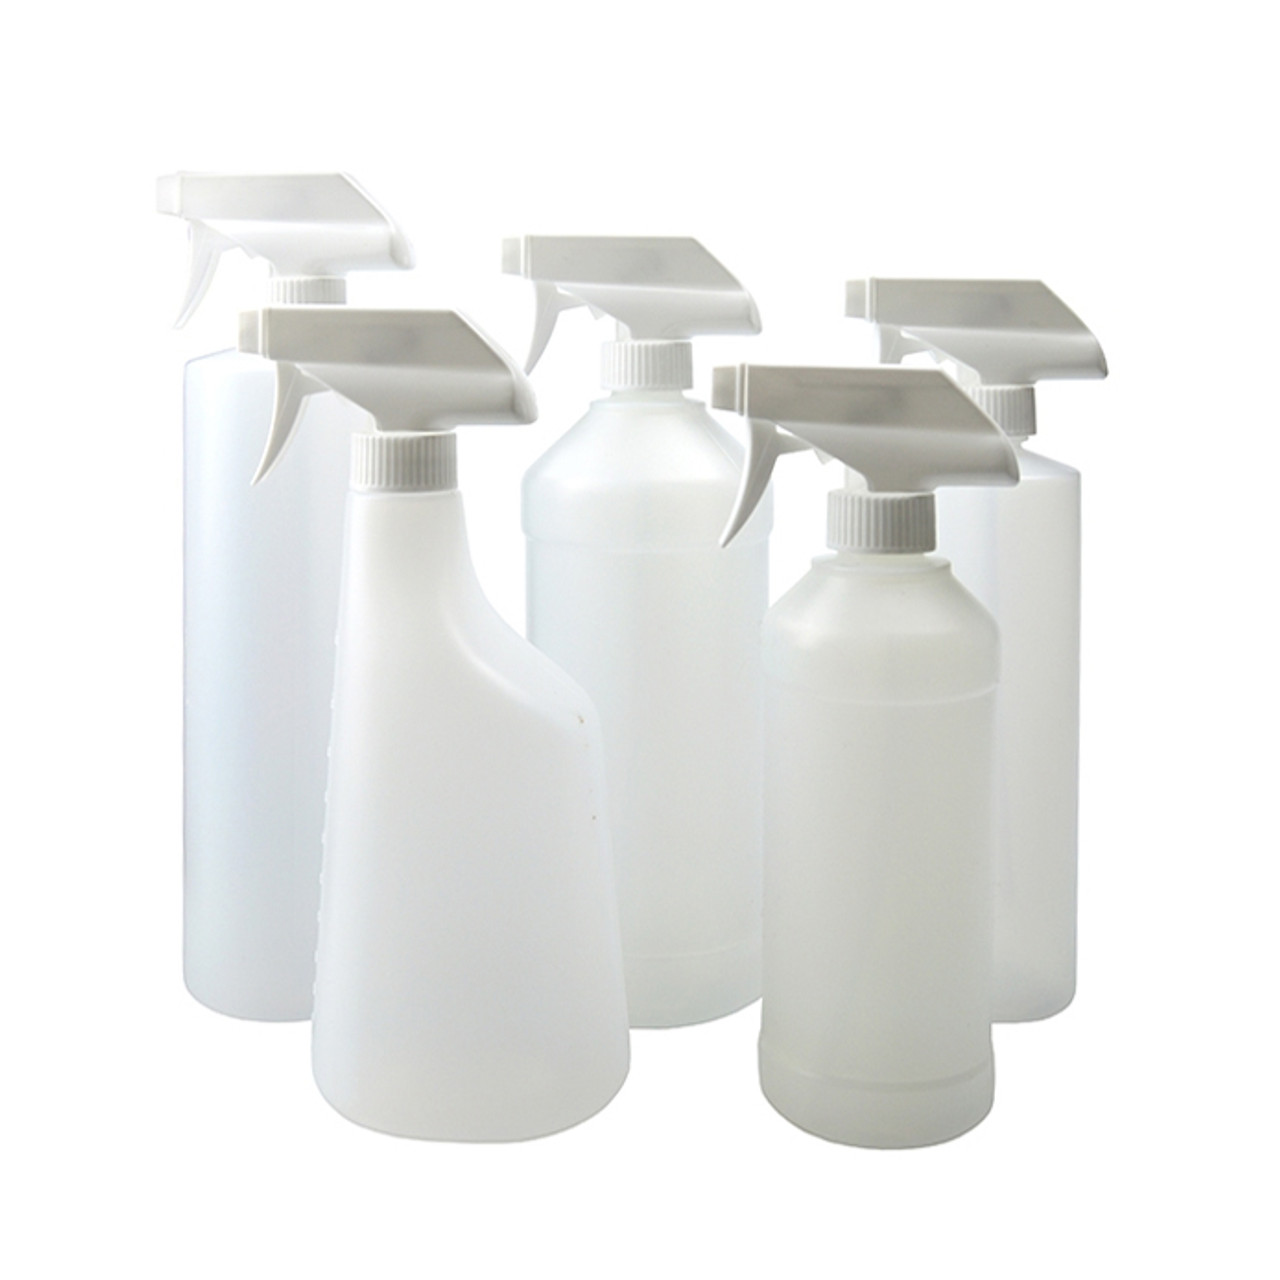 28-400 neck Leak-Free, Chemical Resistant Spray Head 5 Pack